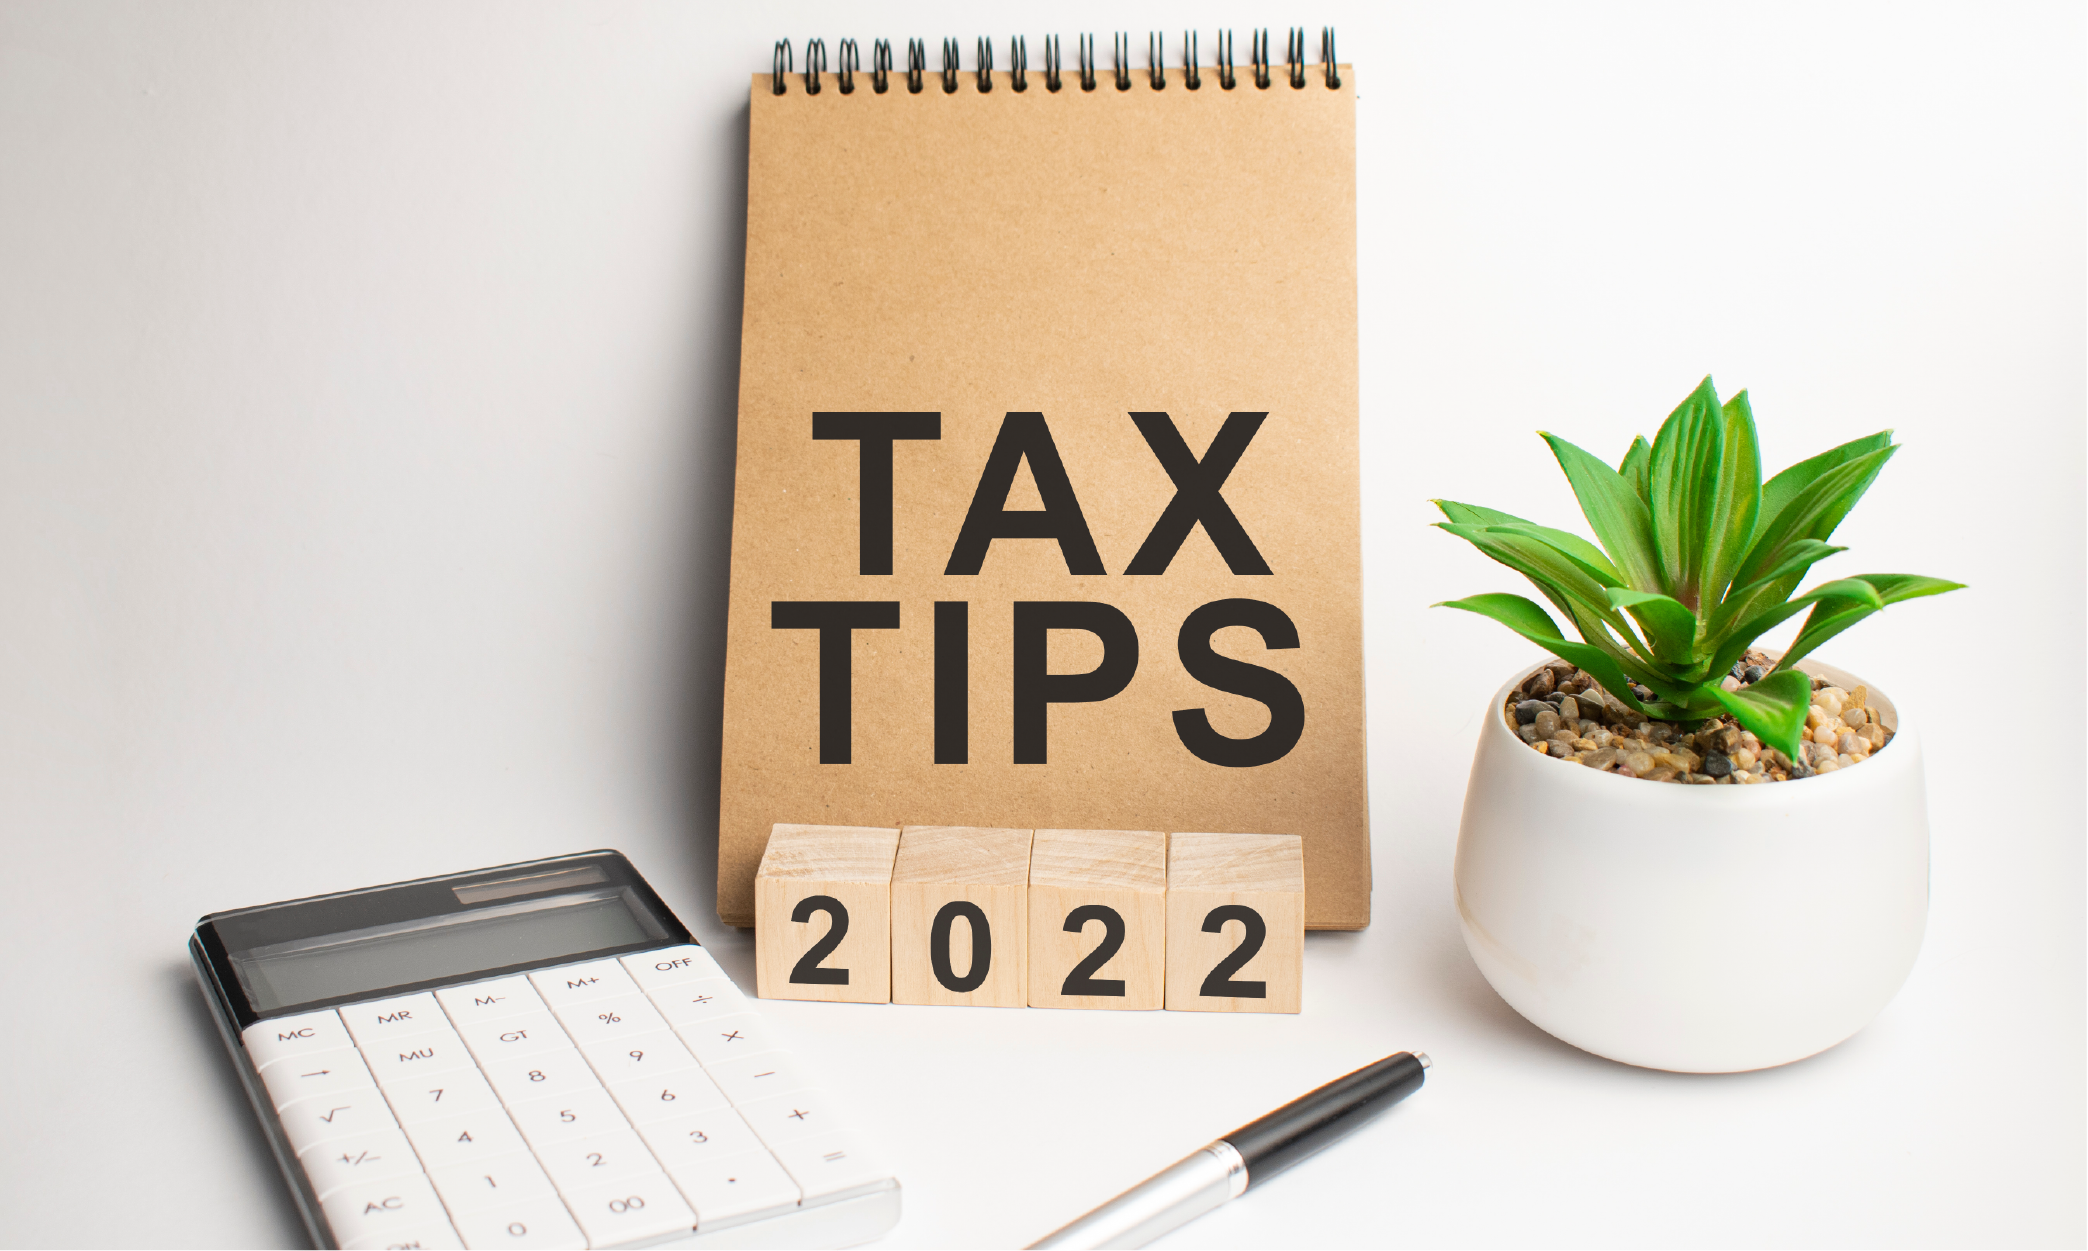 2022 tax tip calendar stock